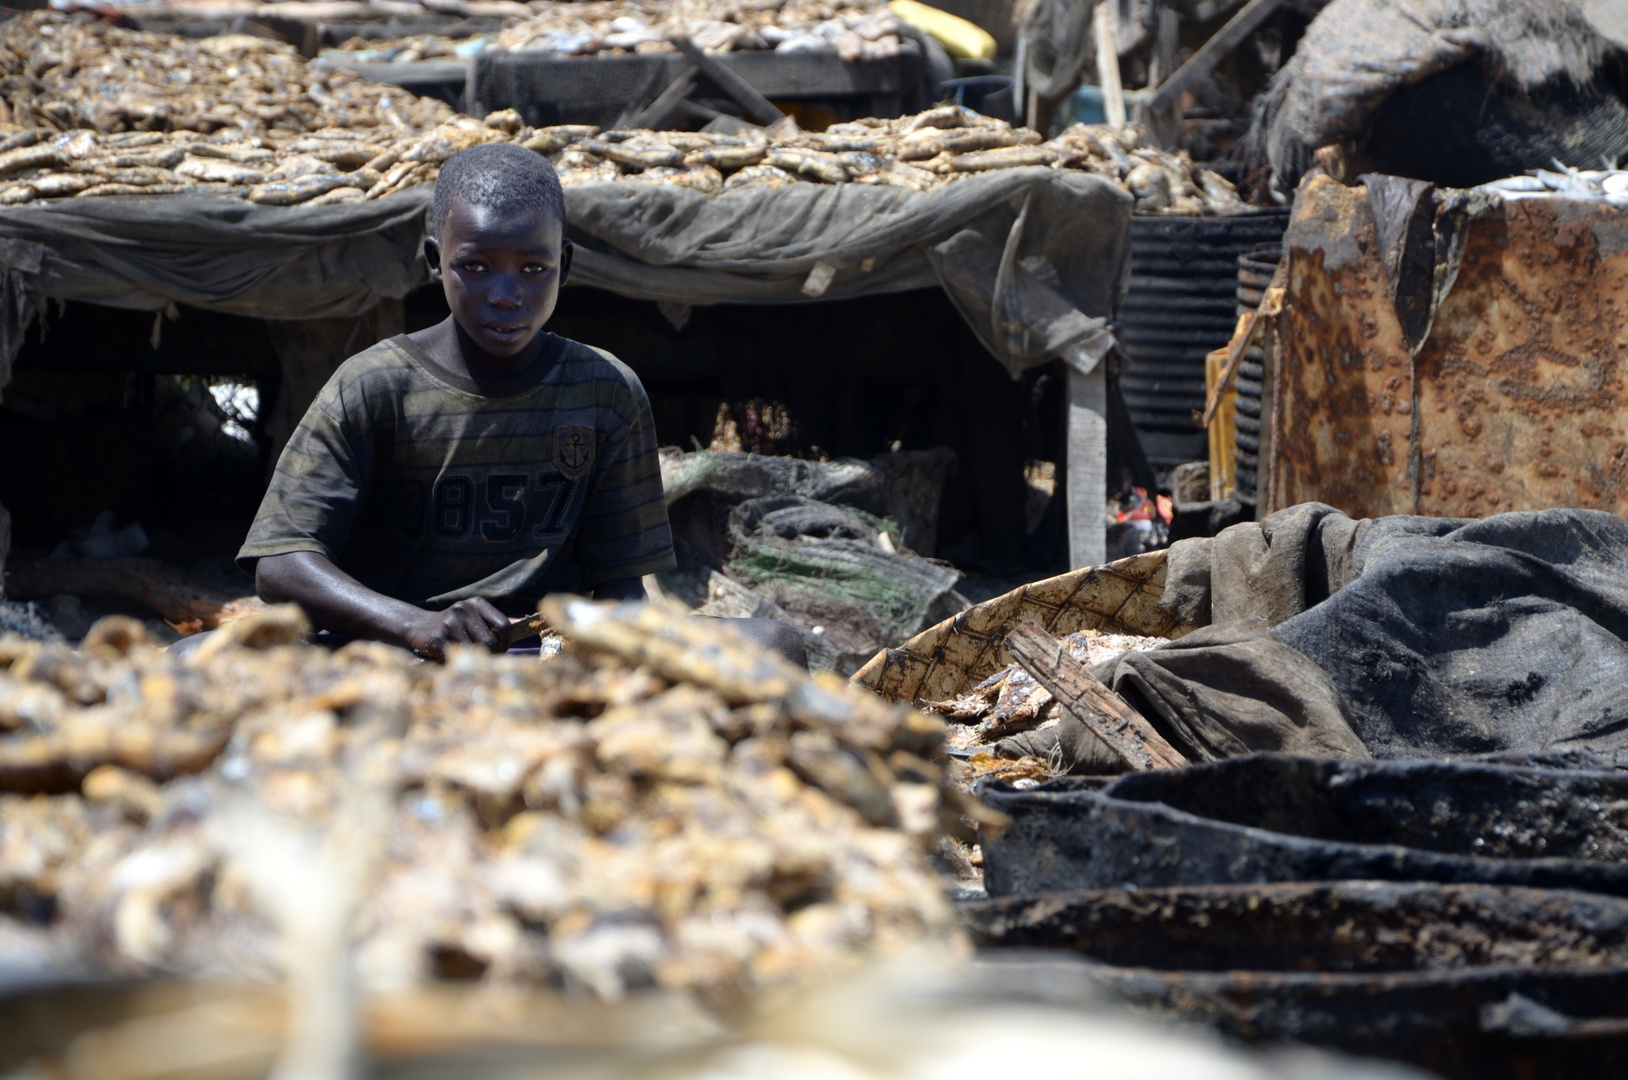 Boy working at Fish Harbour, Saint-Louis, Senegal